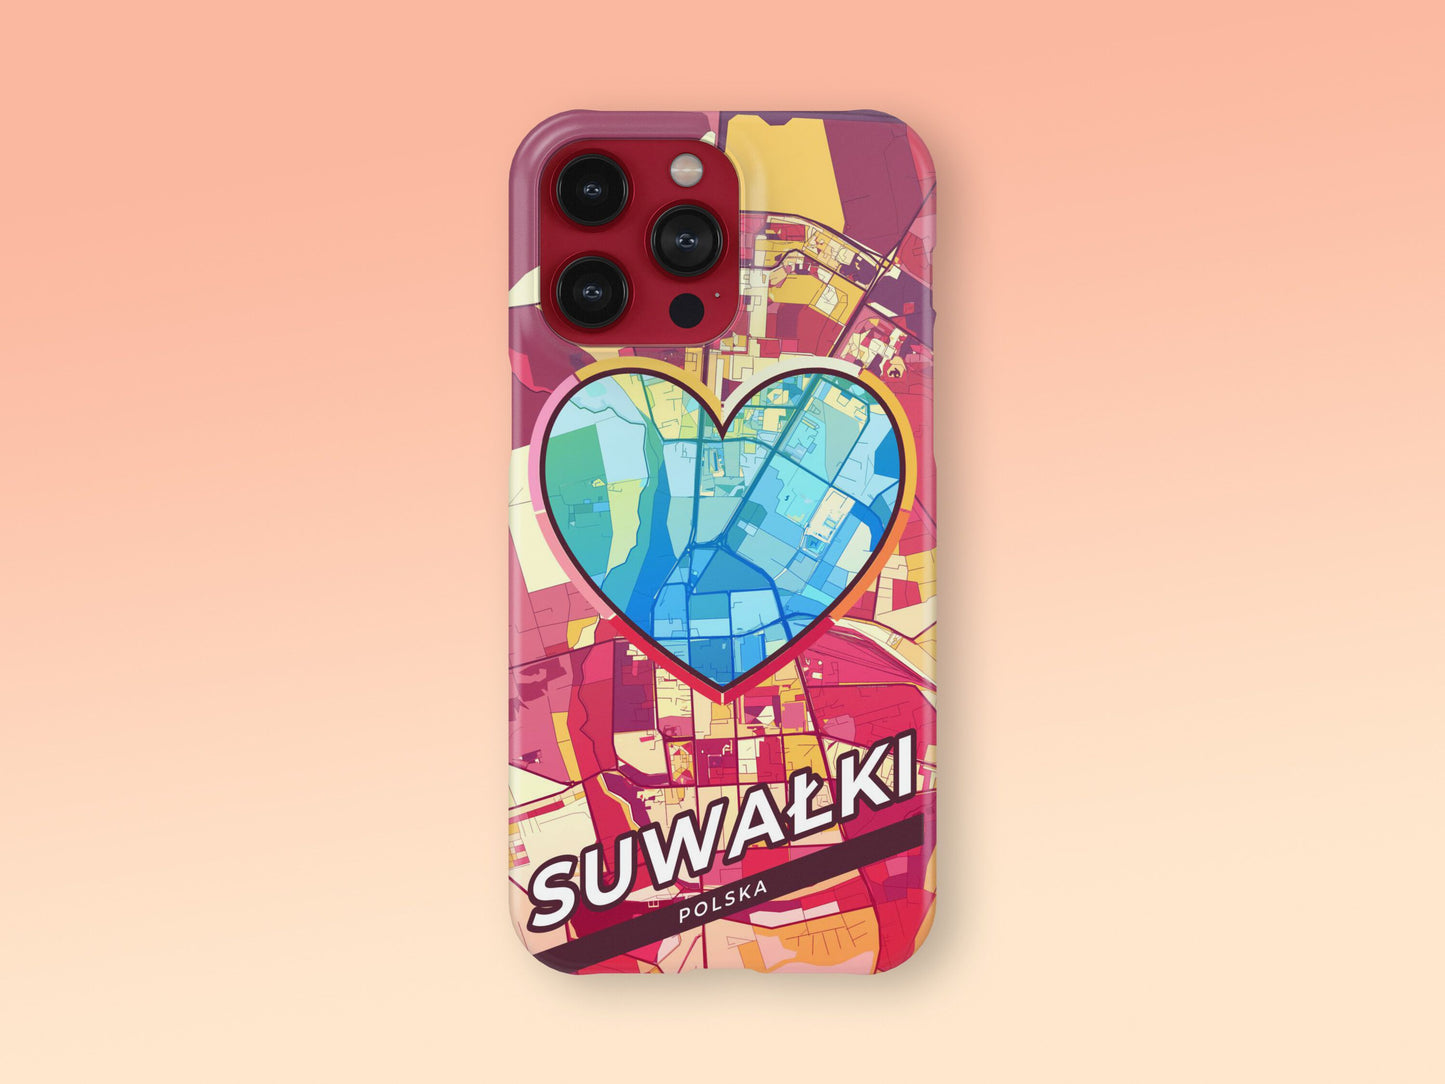 Suwałki Poland slim phone case with colorful icon 2